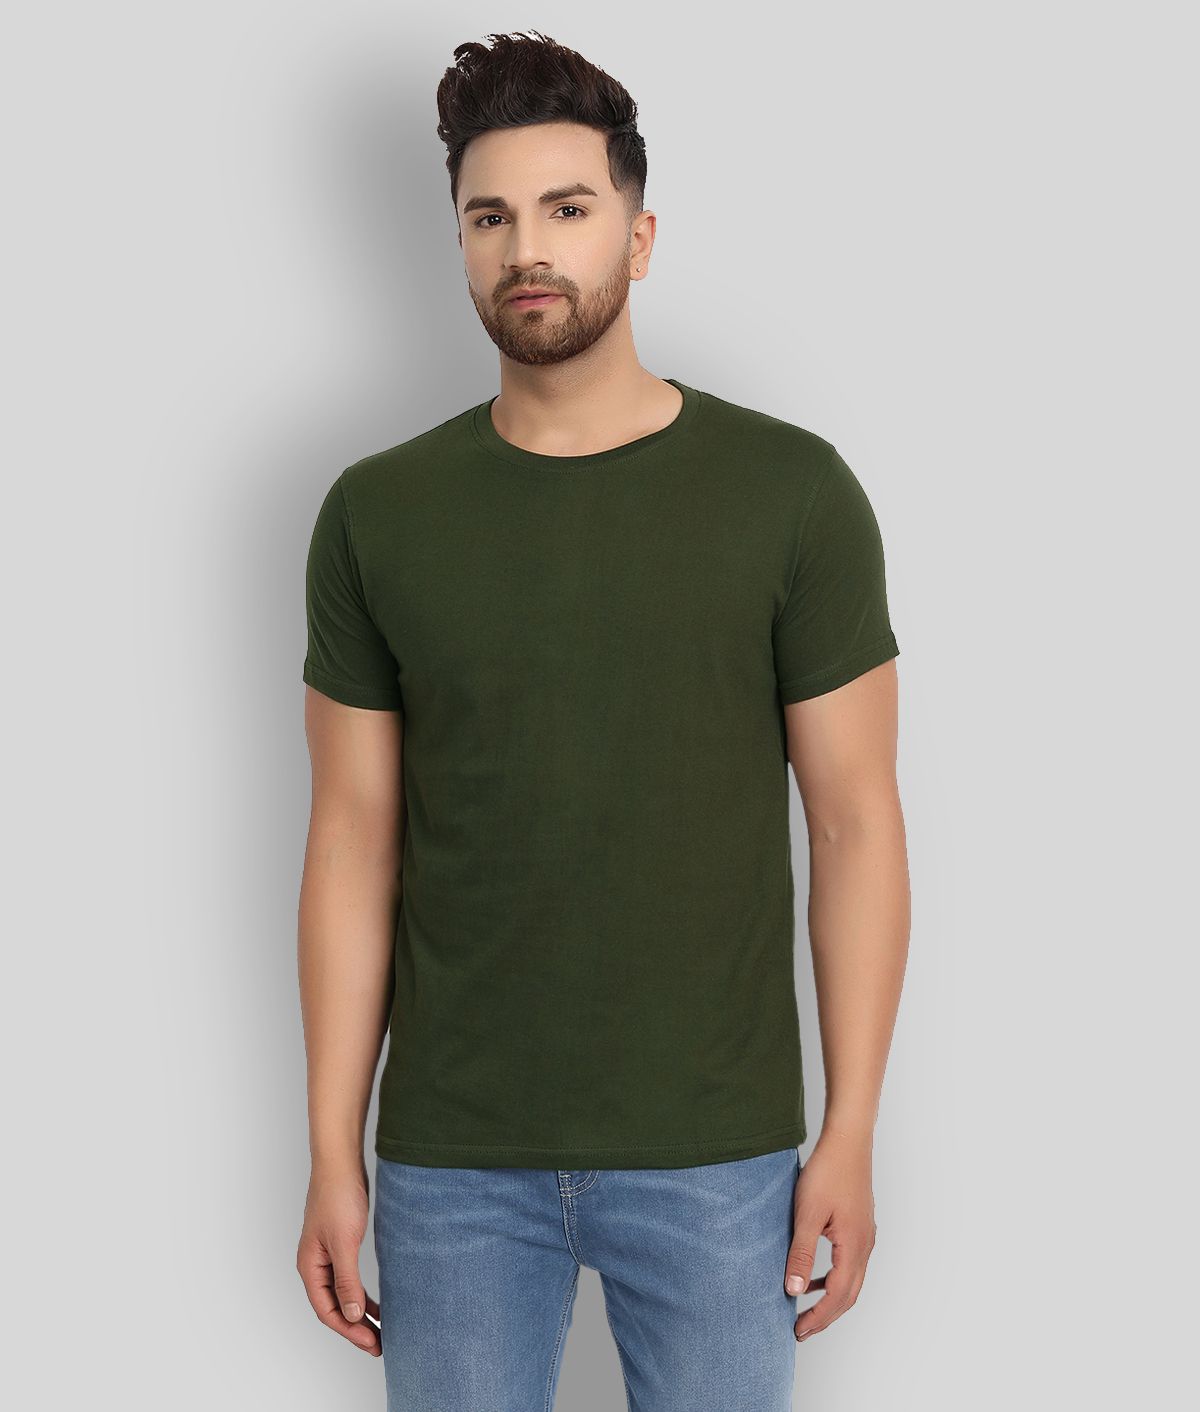     			ESPARTO - Green Cotton Regular Fit Men's T-Shirt ( Pack of 1 )